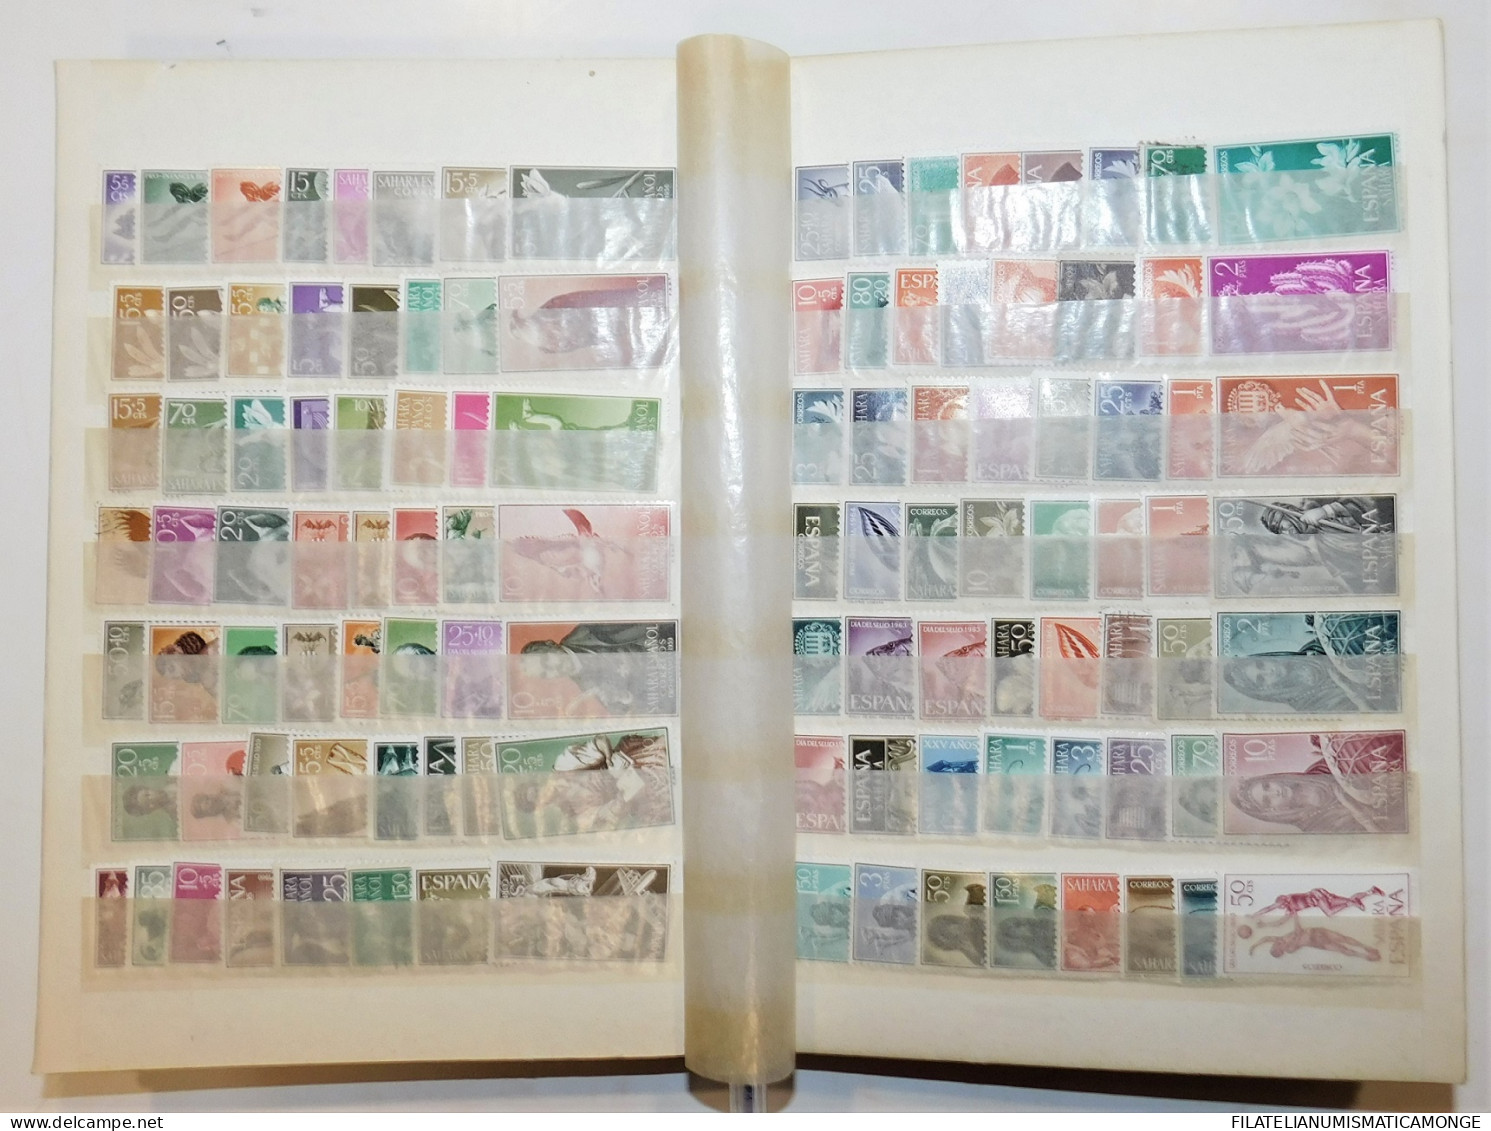  Offer - Lot Stamps - Paqueteria  Colonias Españolas / Varios 1600 sellos difer